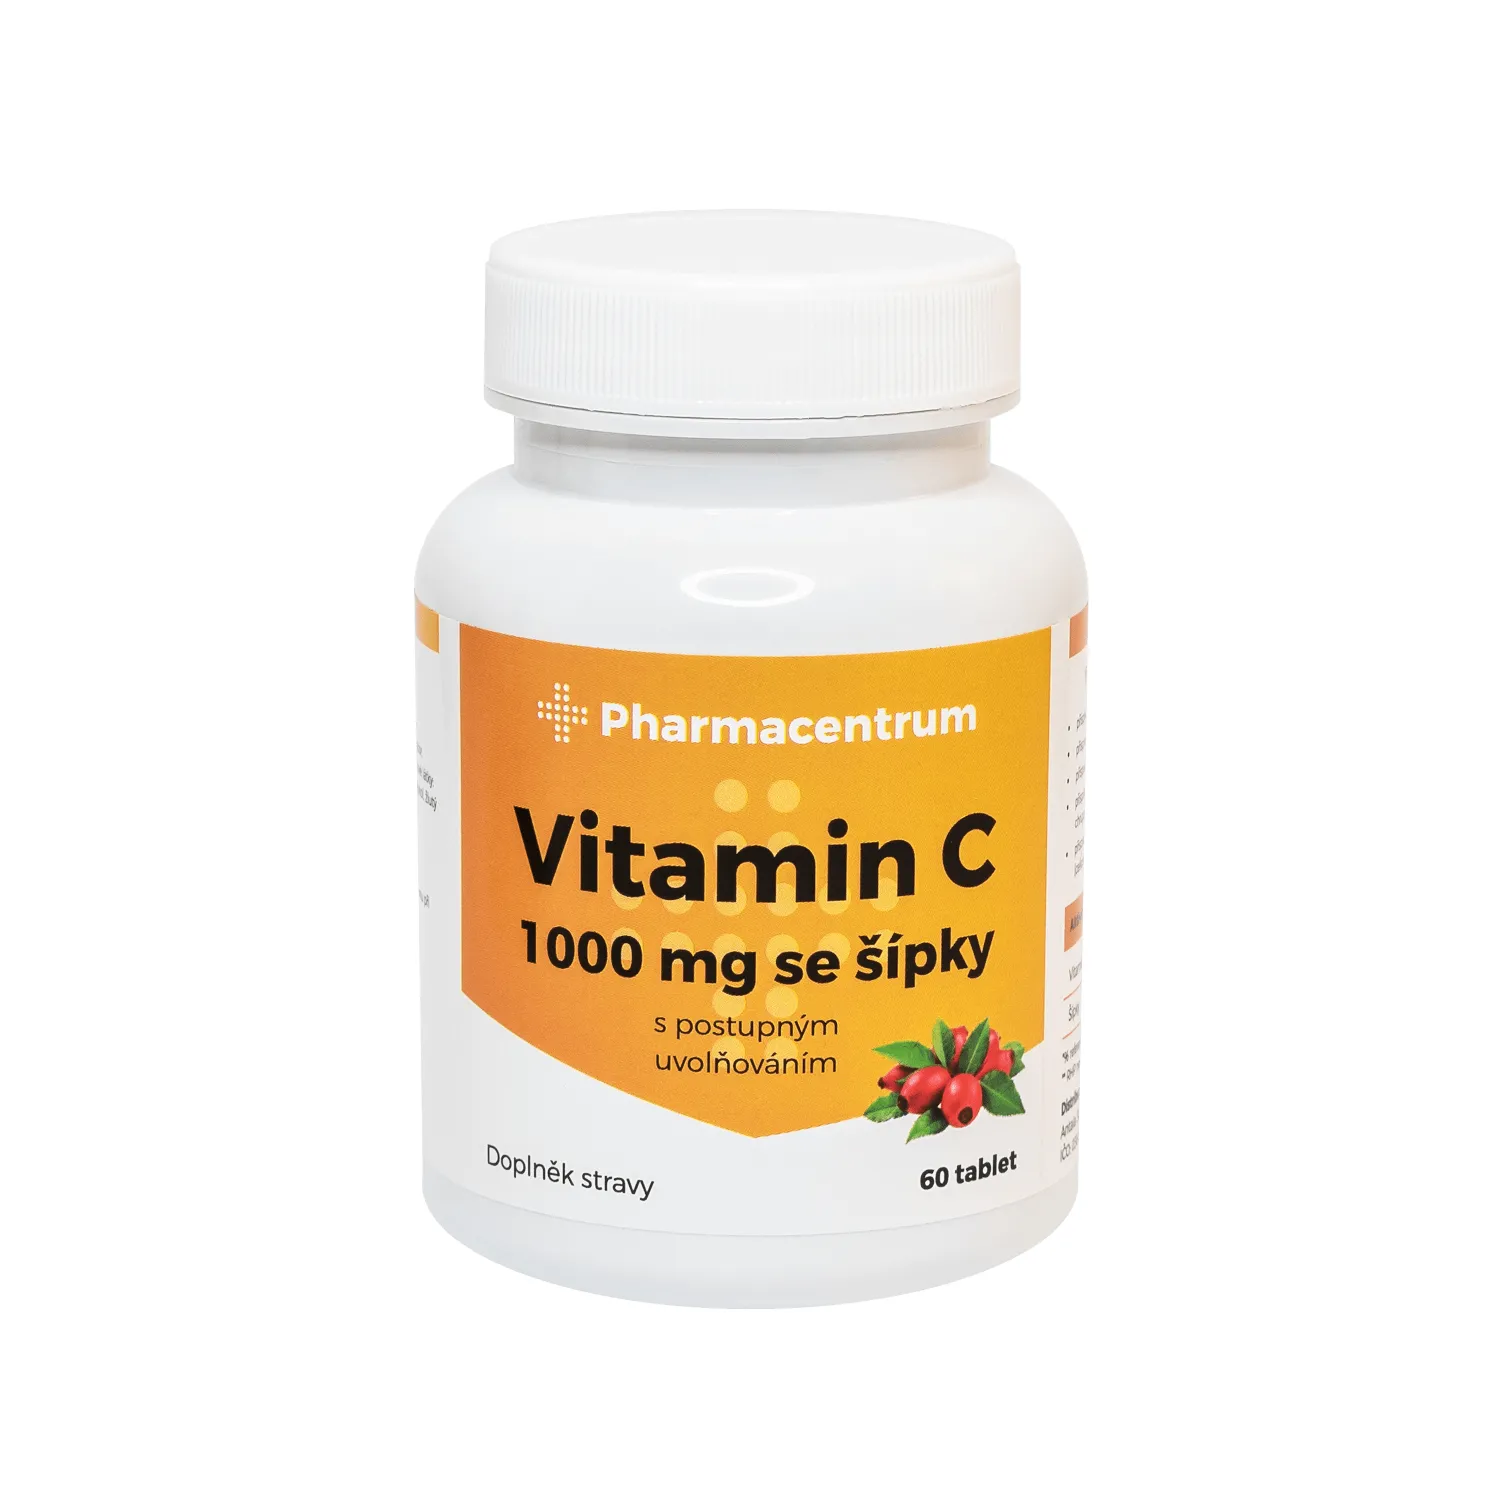 Pharmacentrum Vitamin C 1000 mg se šípky 60 tablet